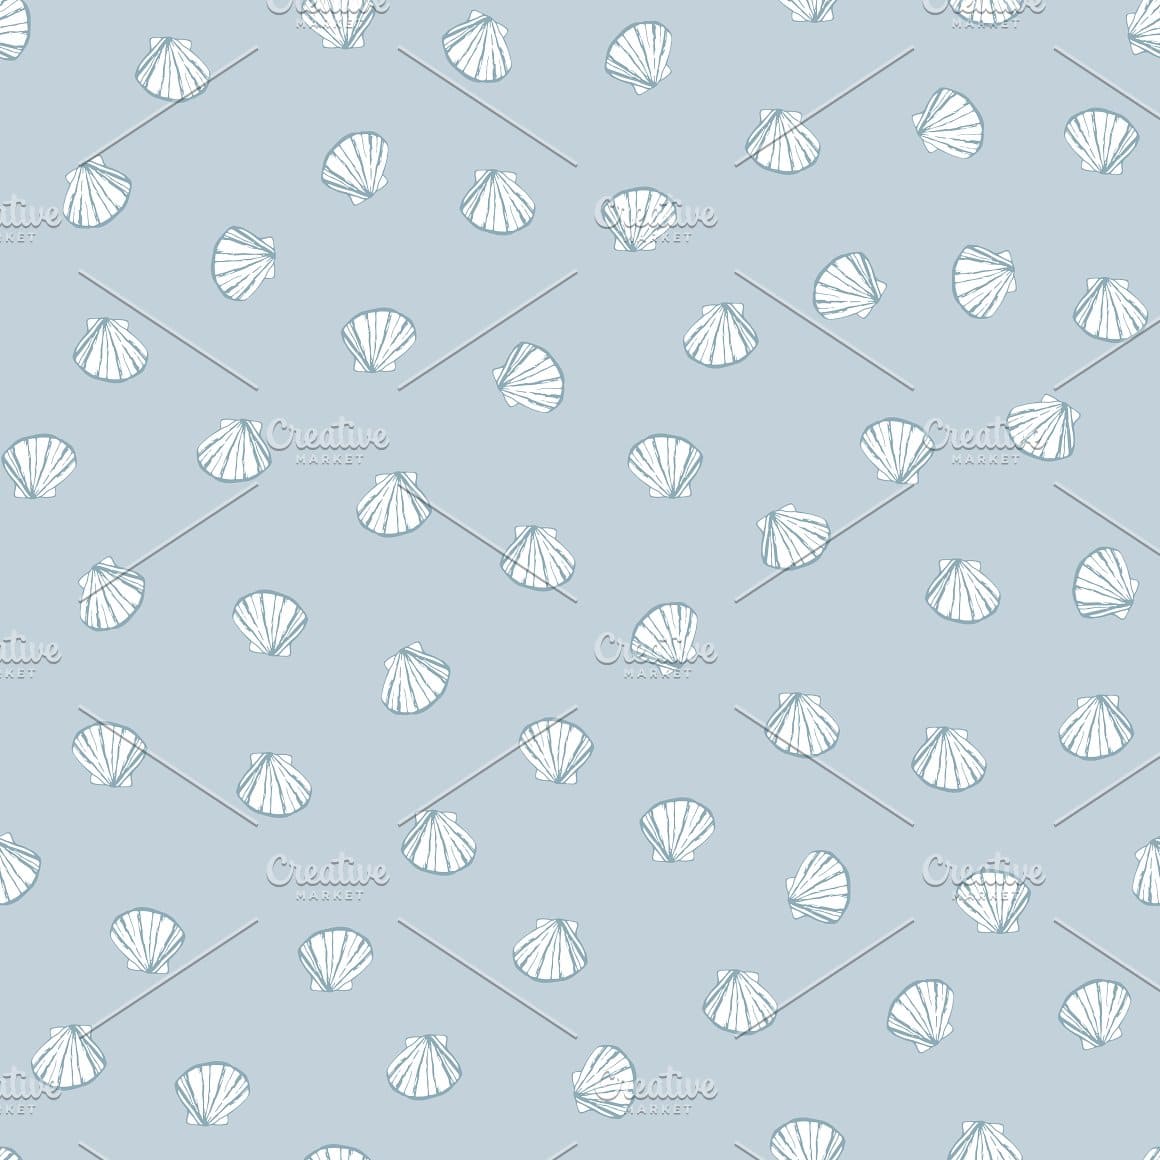 White shells on a light blue background.